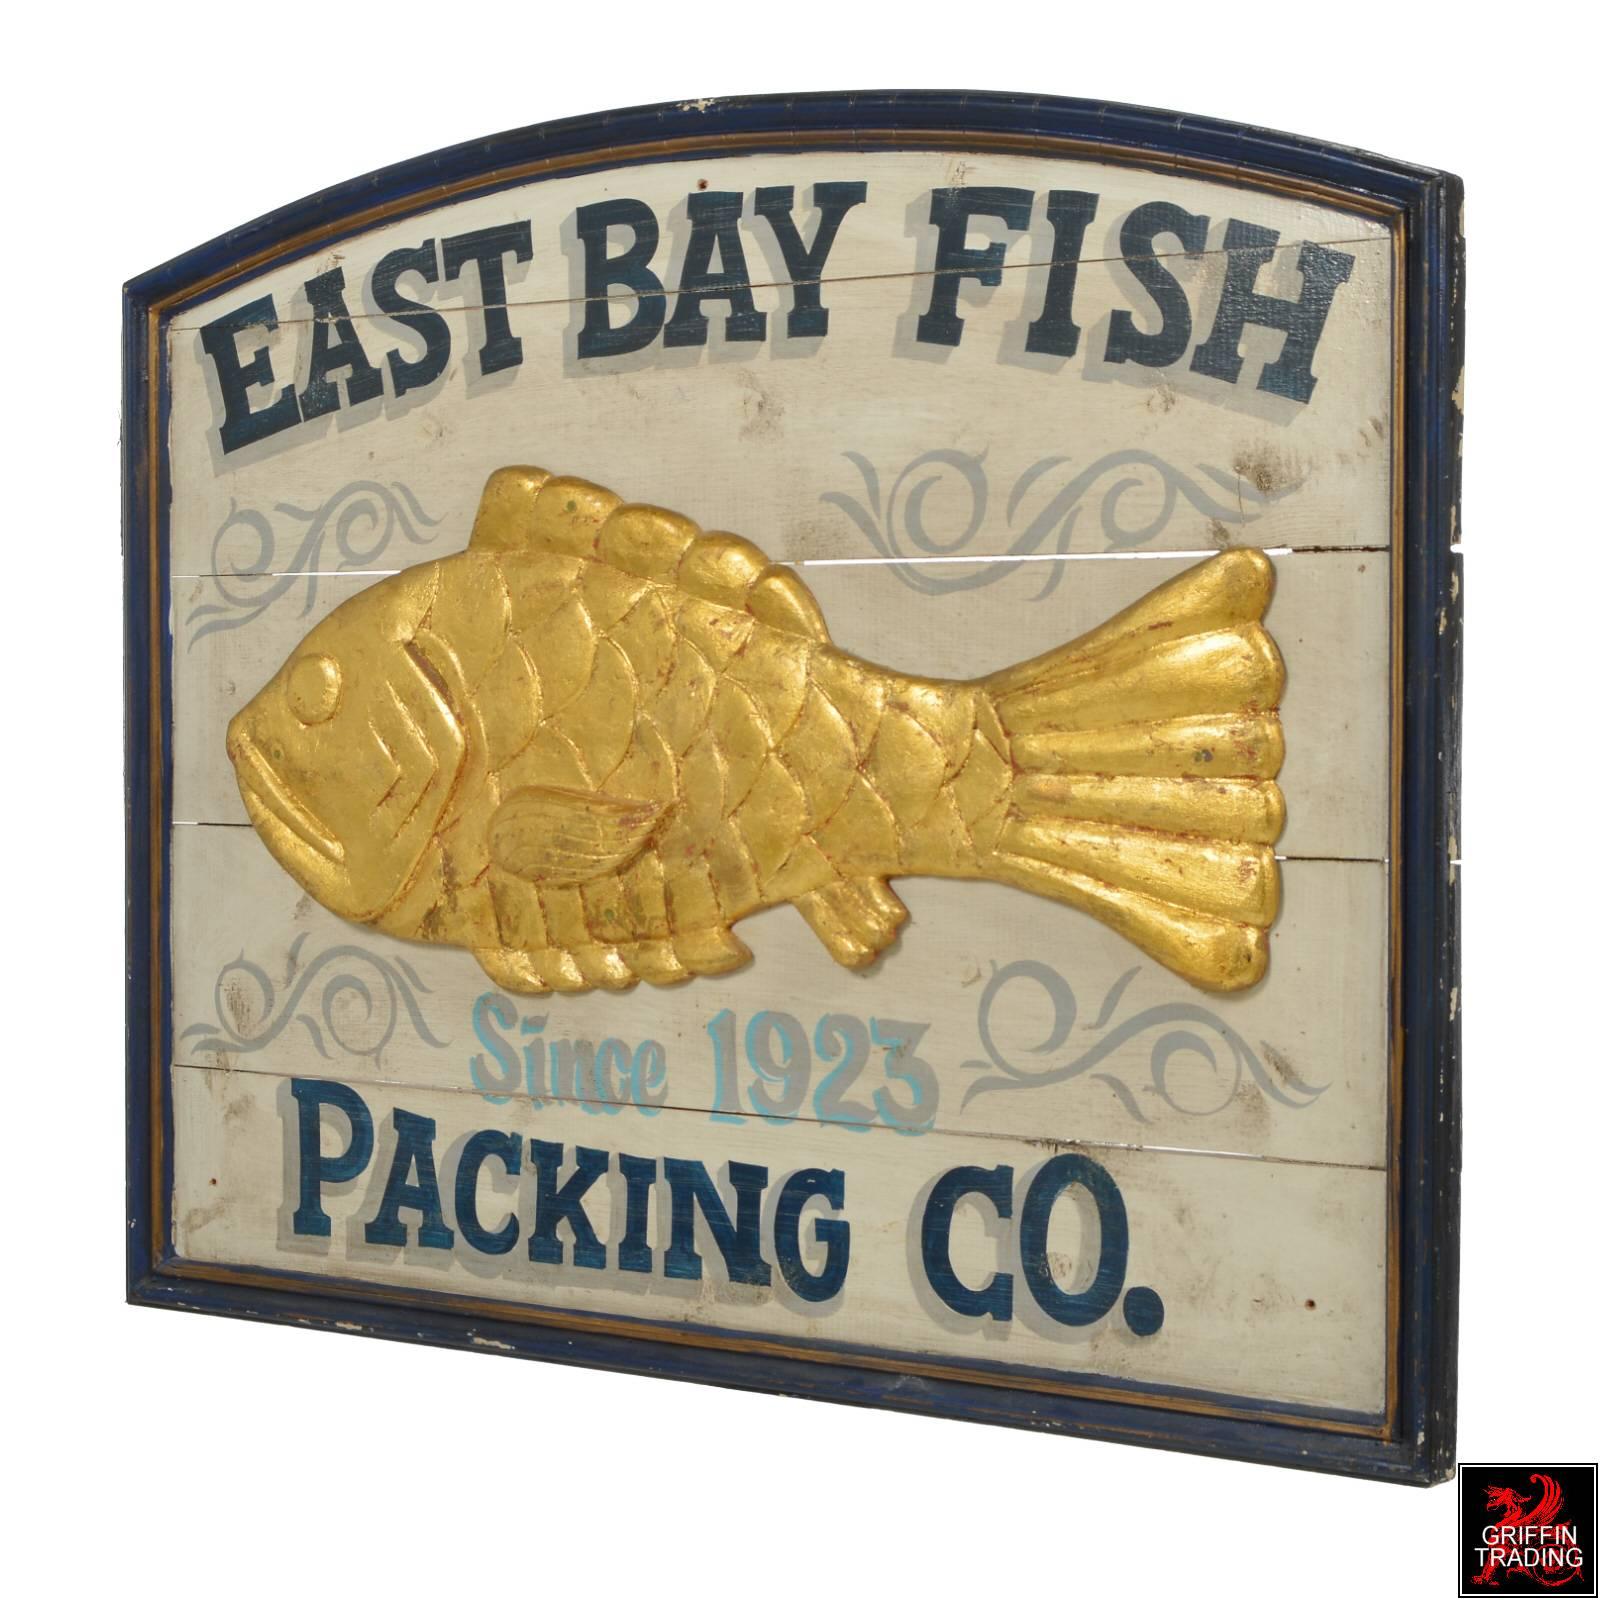 east bay fish co. photos